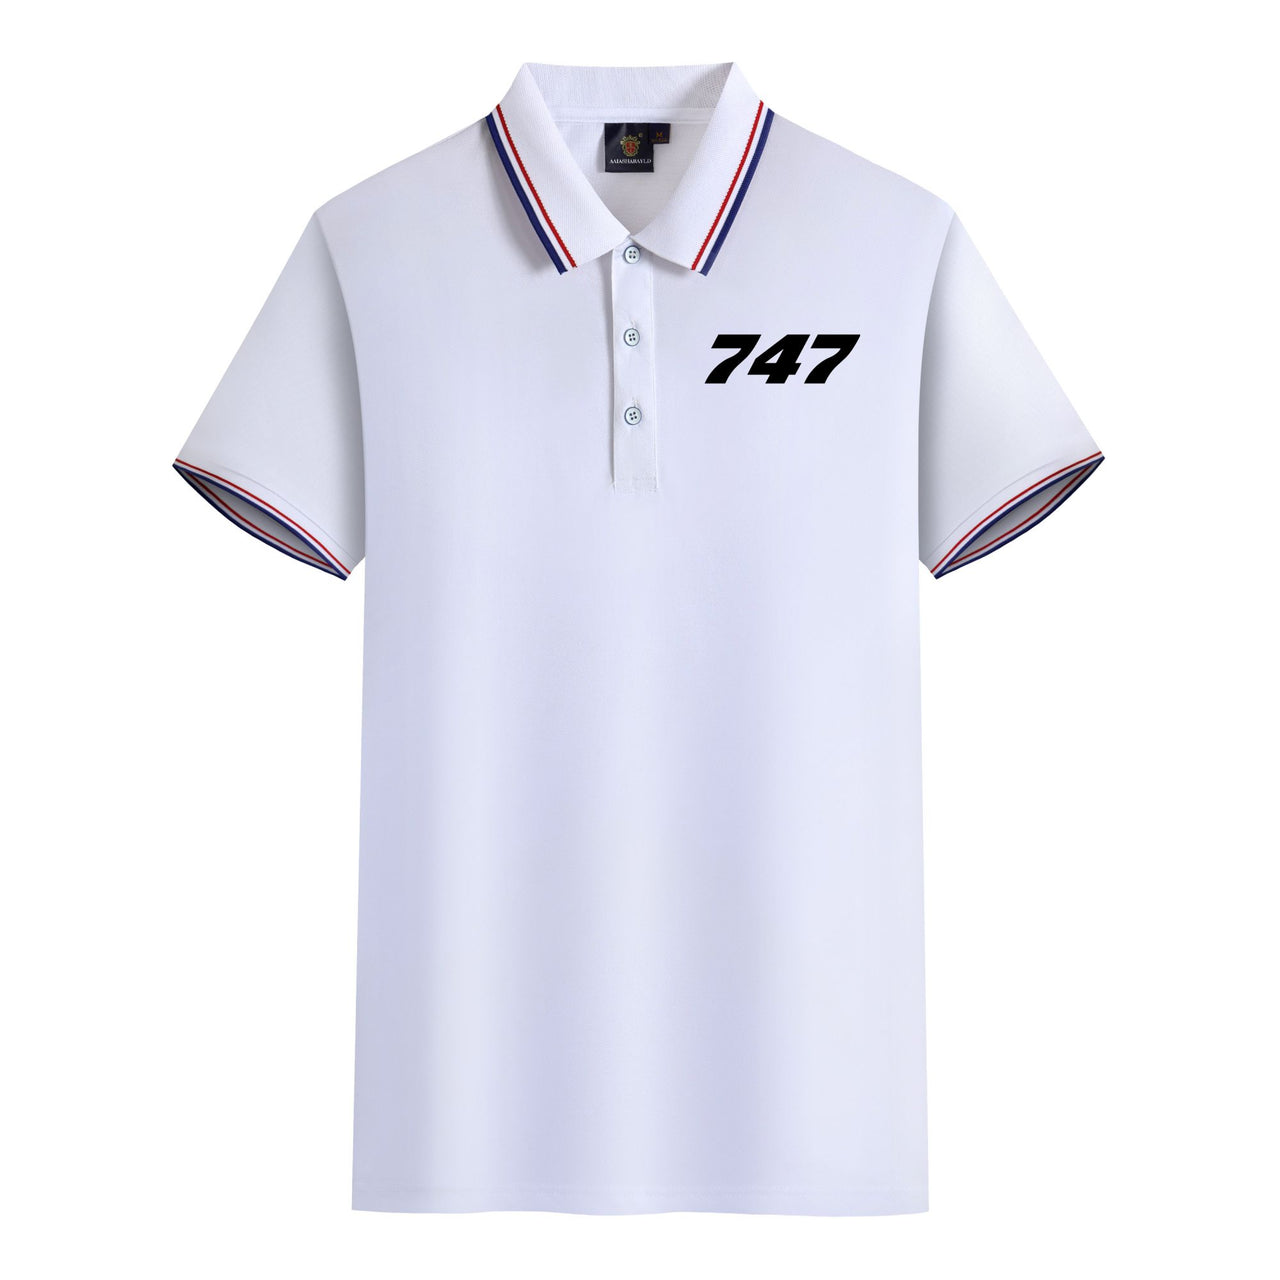 747 Flat Text Designed Stylish Polo T-Shirts